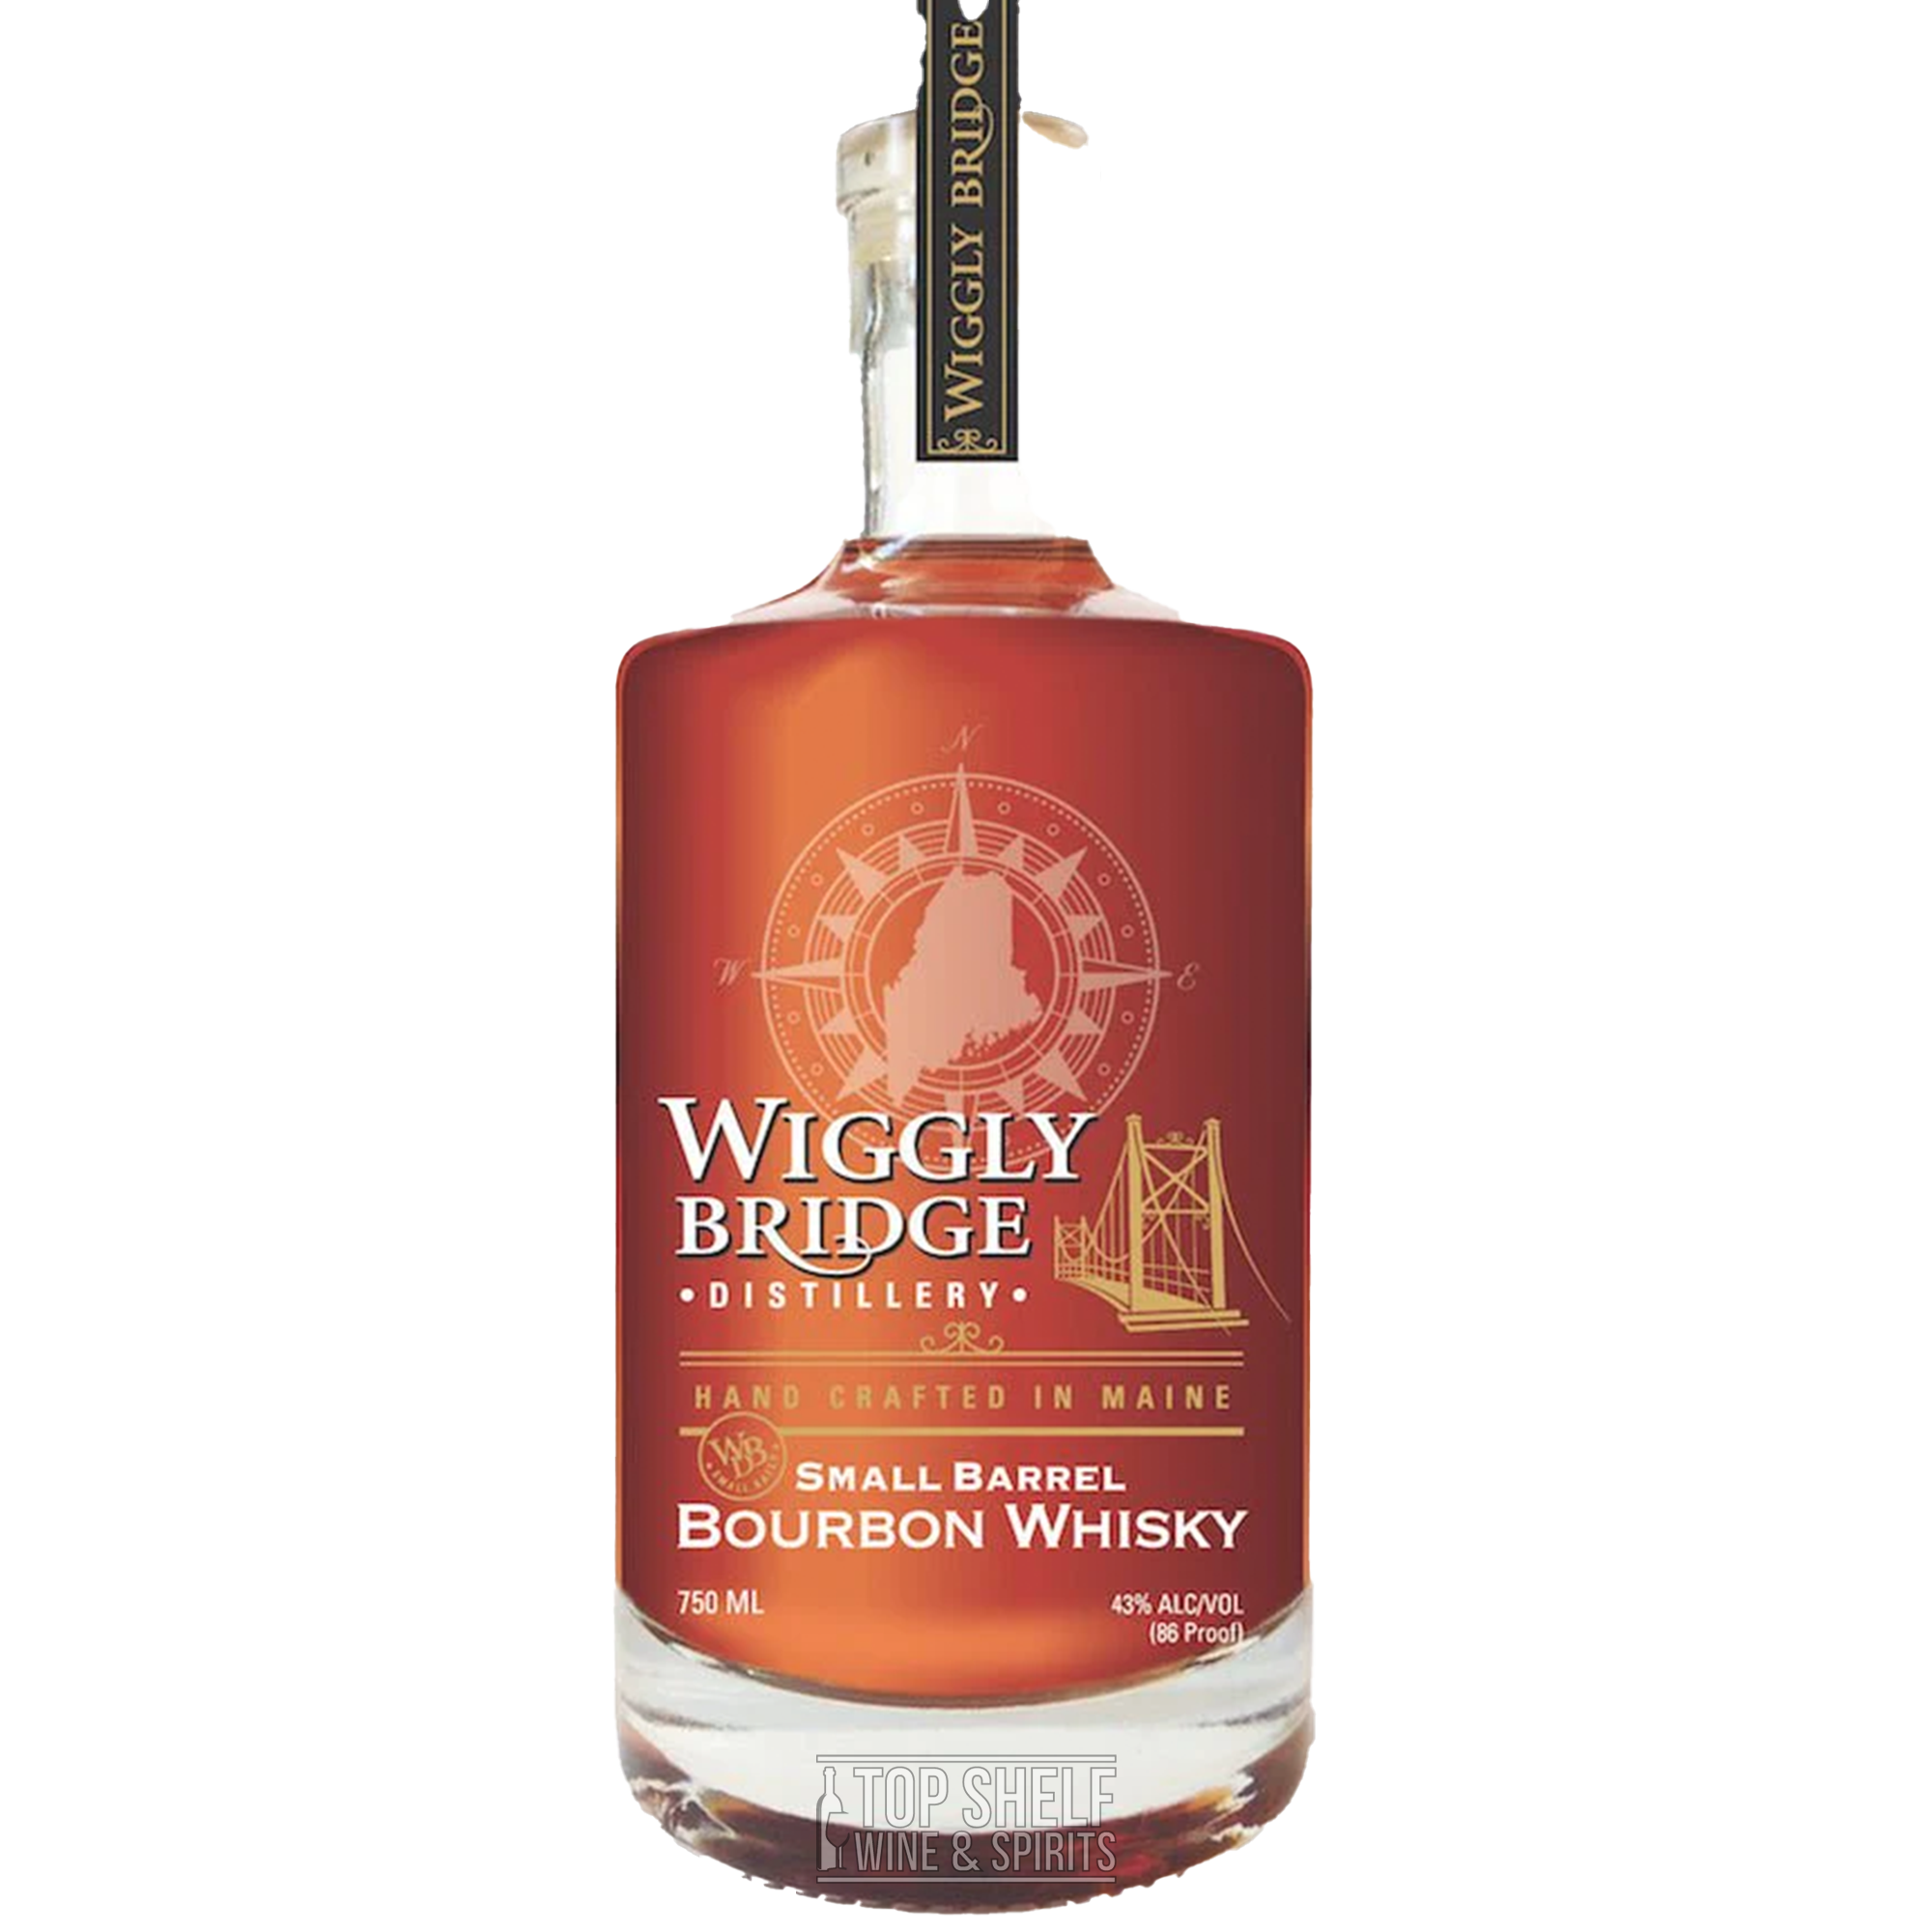 Wiggly Bridge Small Barrel Bourbon Whisky